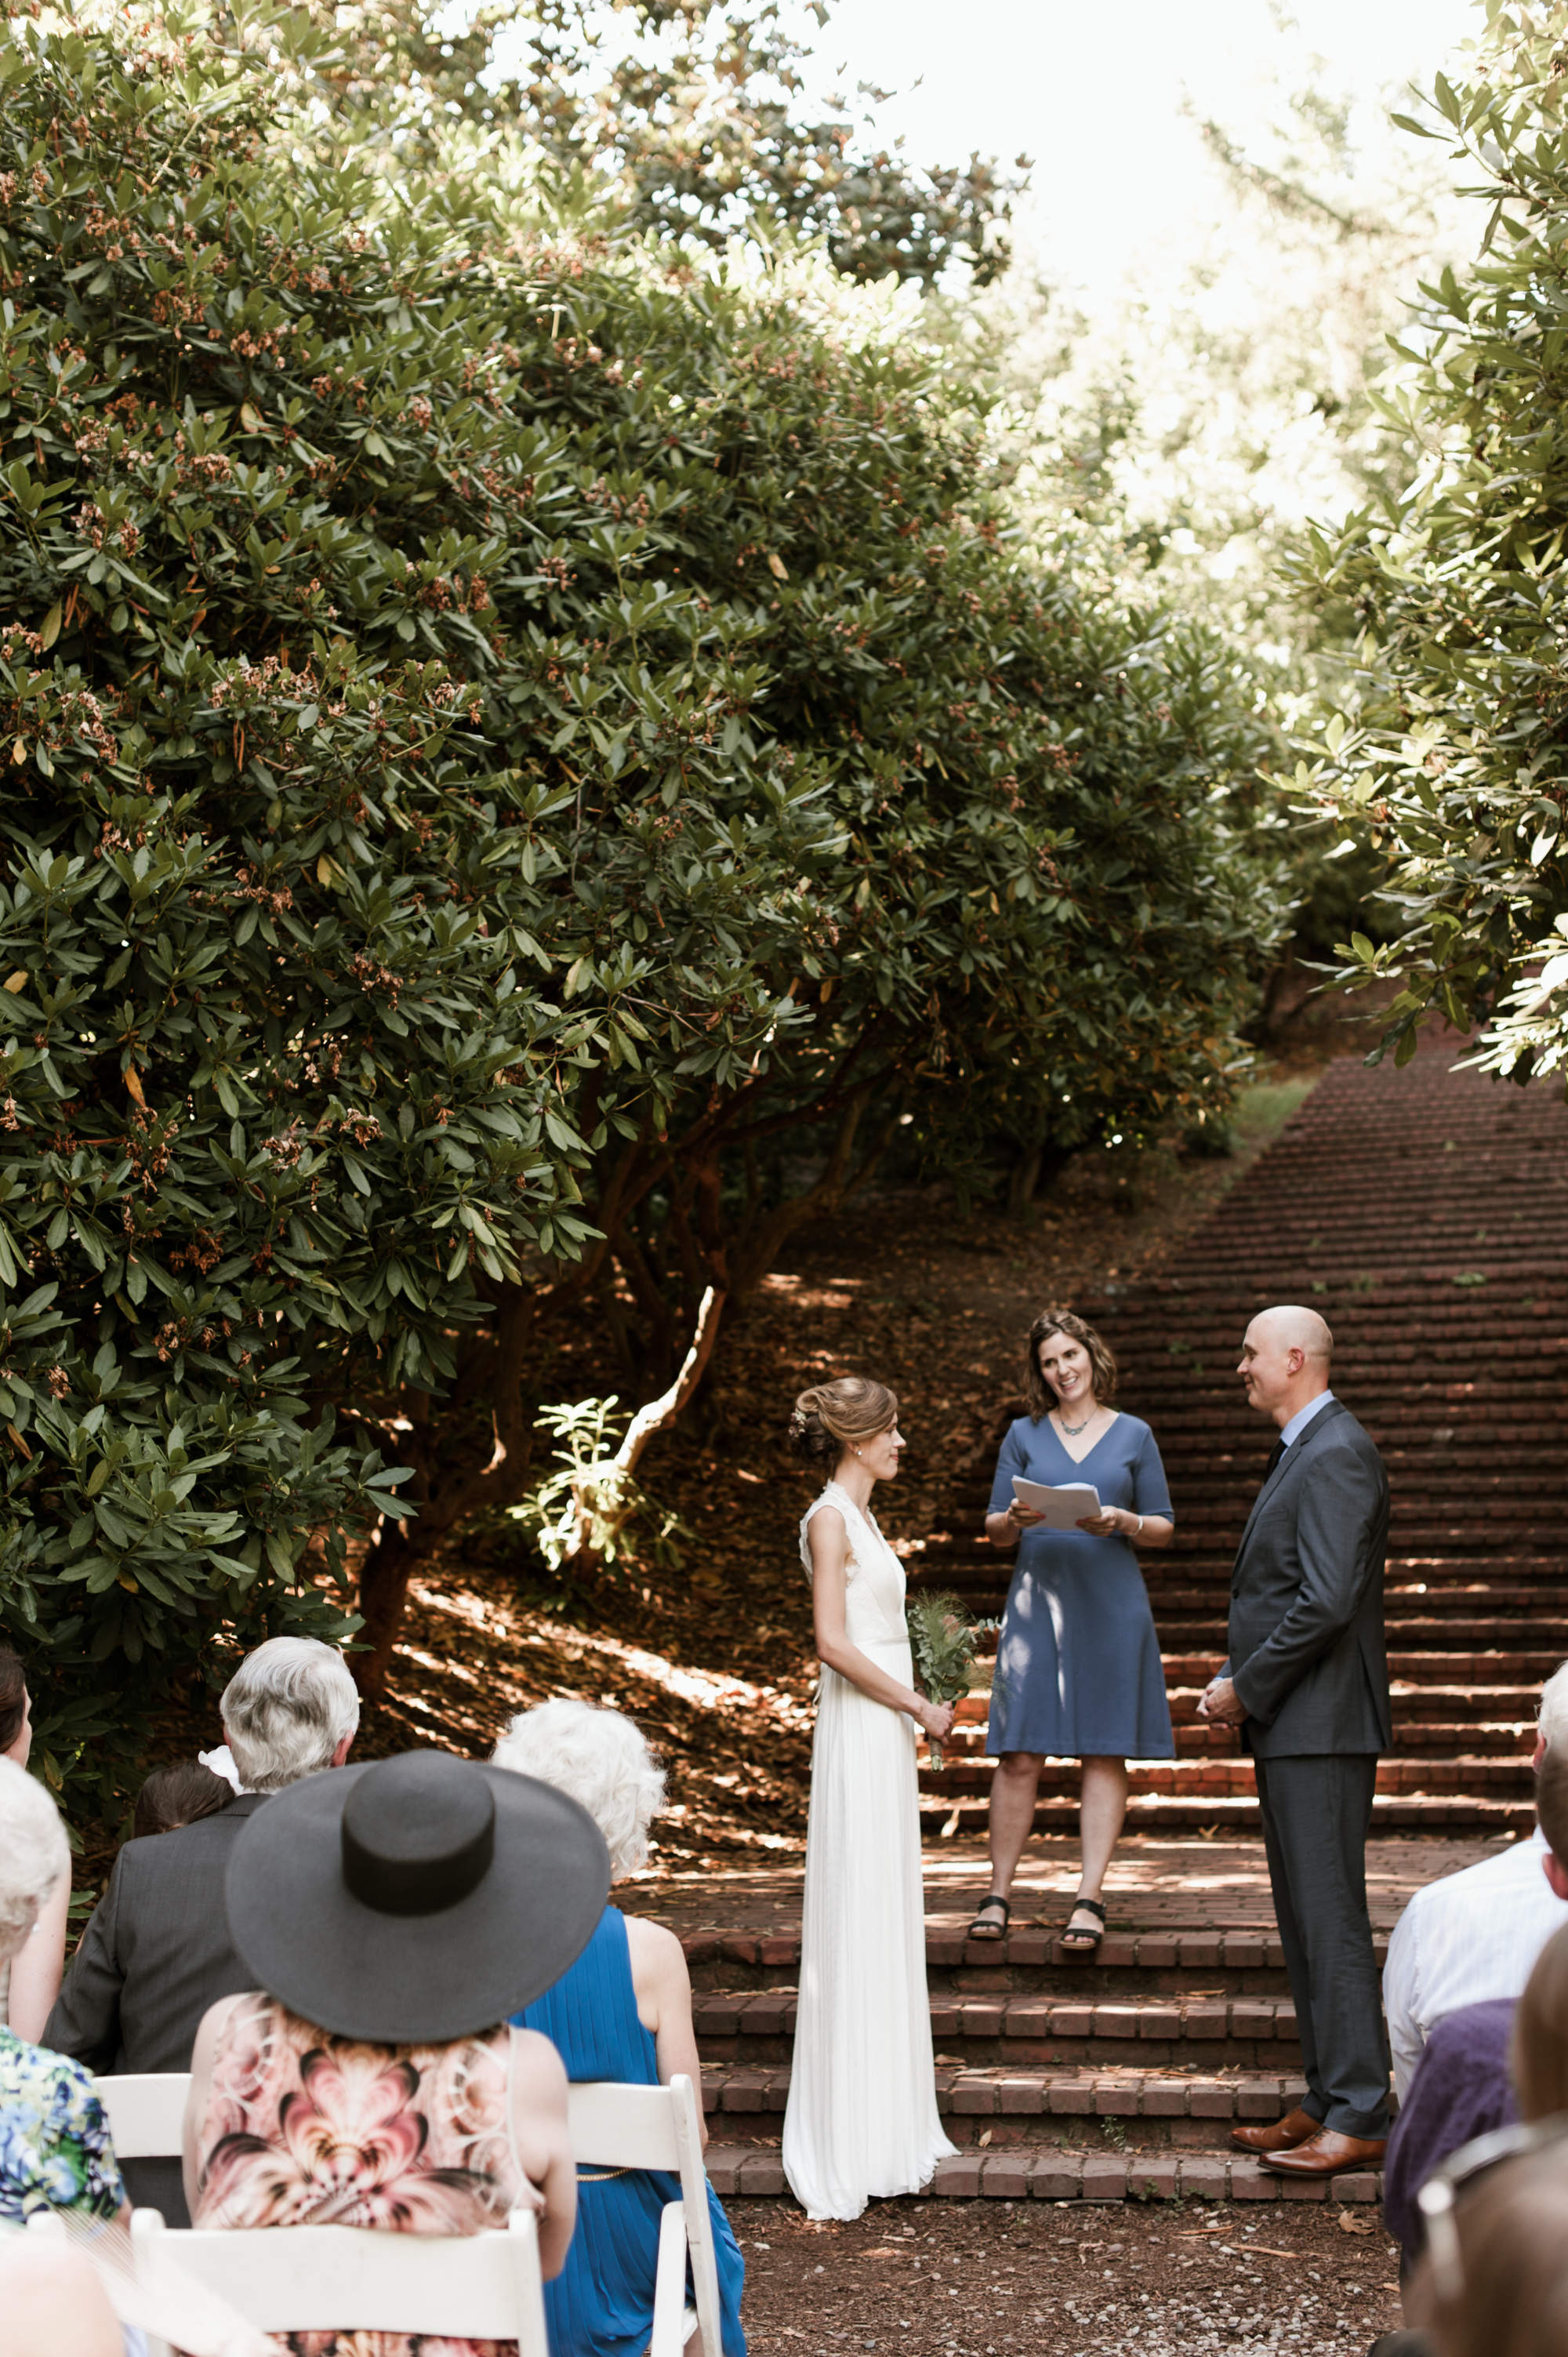 An intimate wedding ceremony in Laurelhurst Park. By Laurelhurst Park wedding photographer Briana Morrison